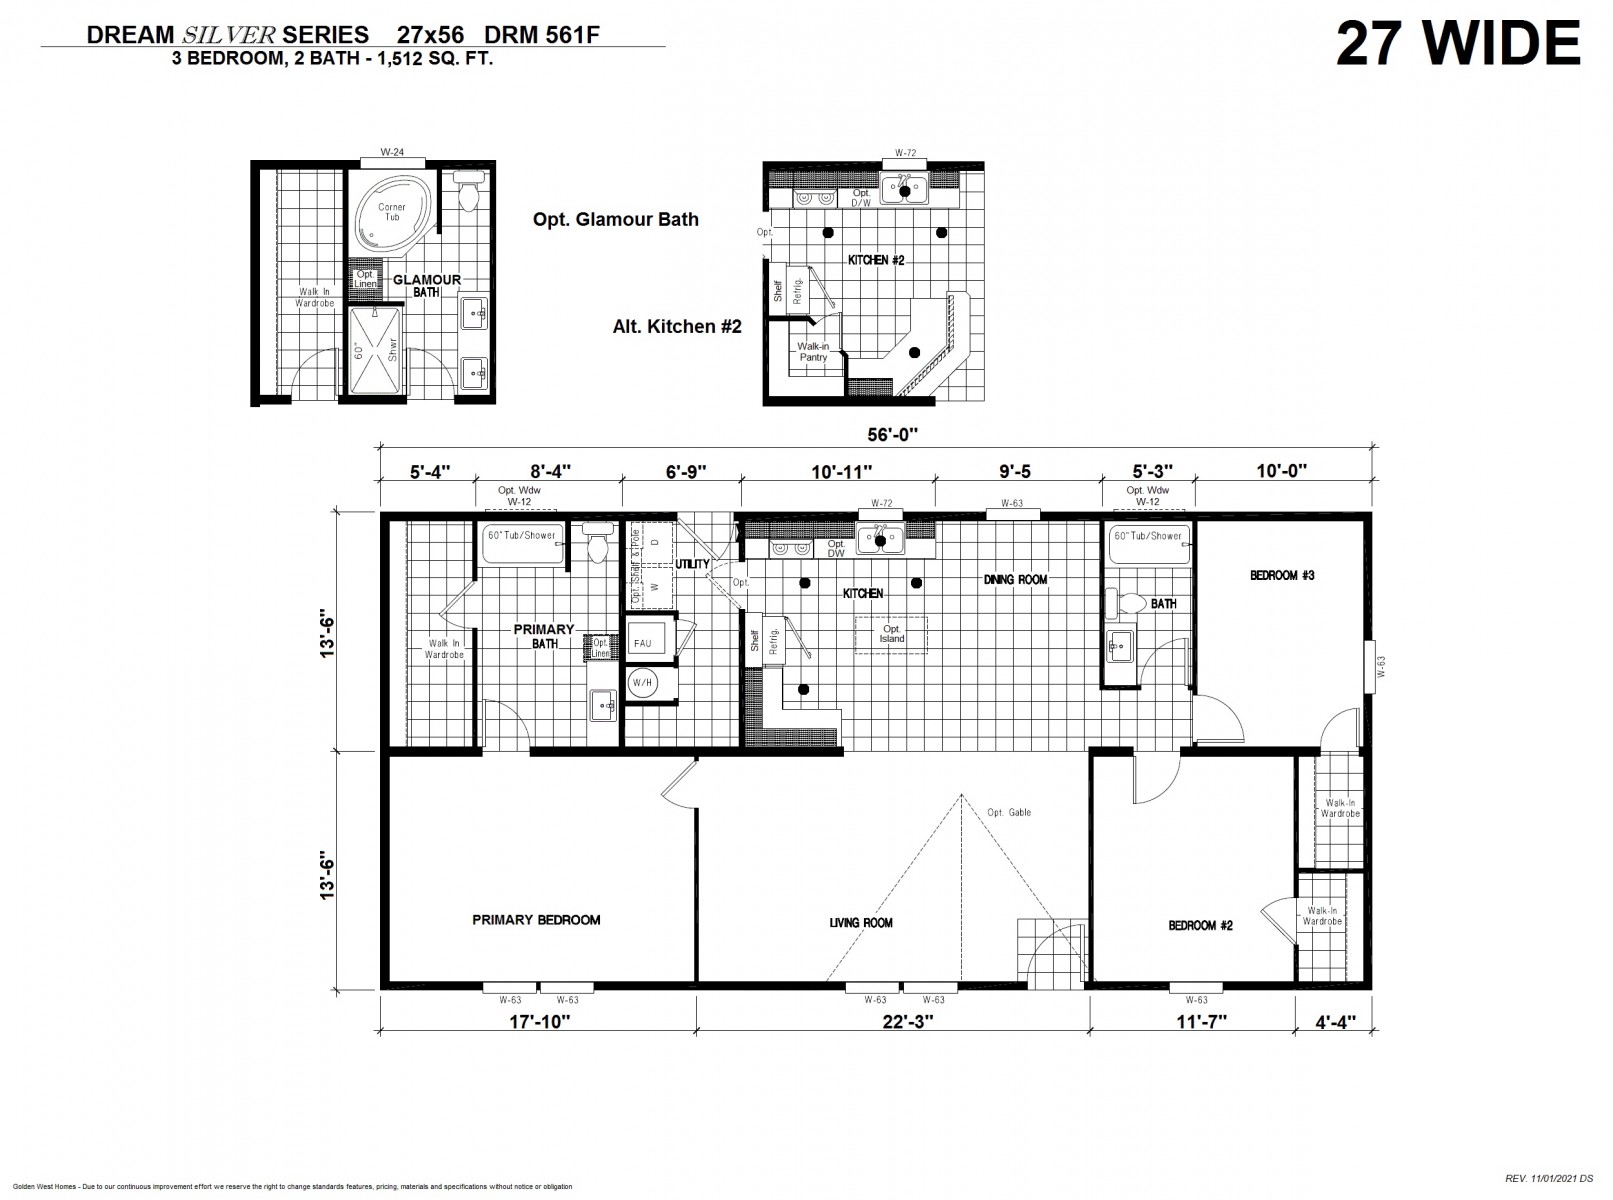 Homes Direct Modular Homes - Model DRM561F - Floorplan